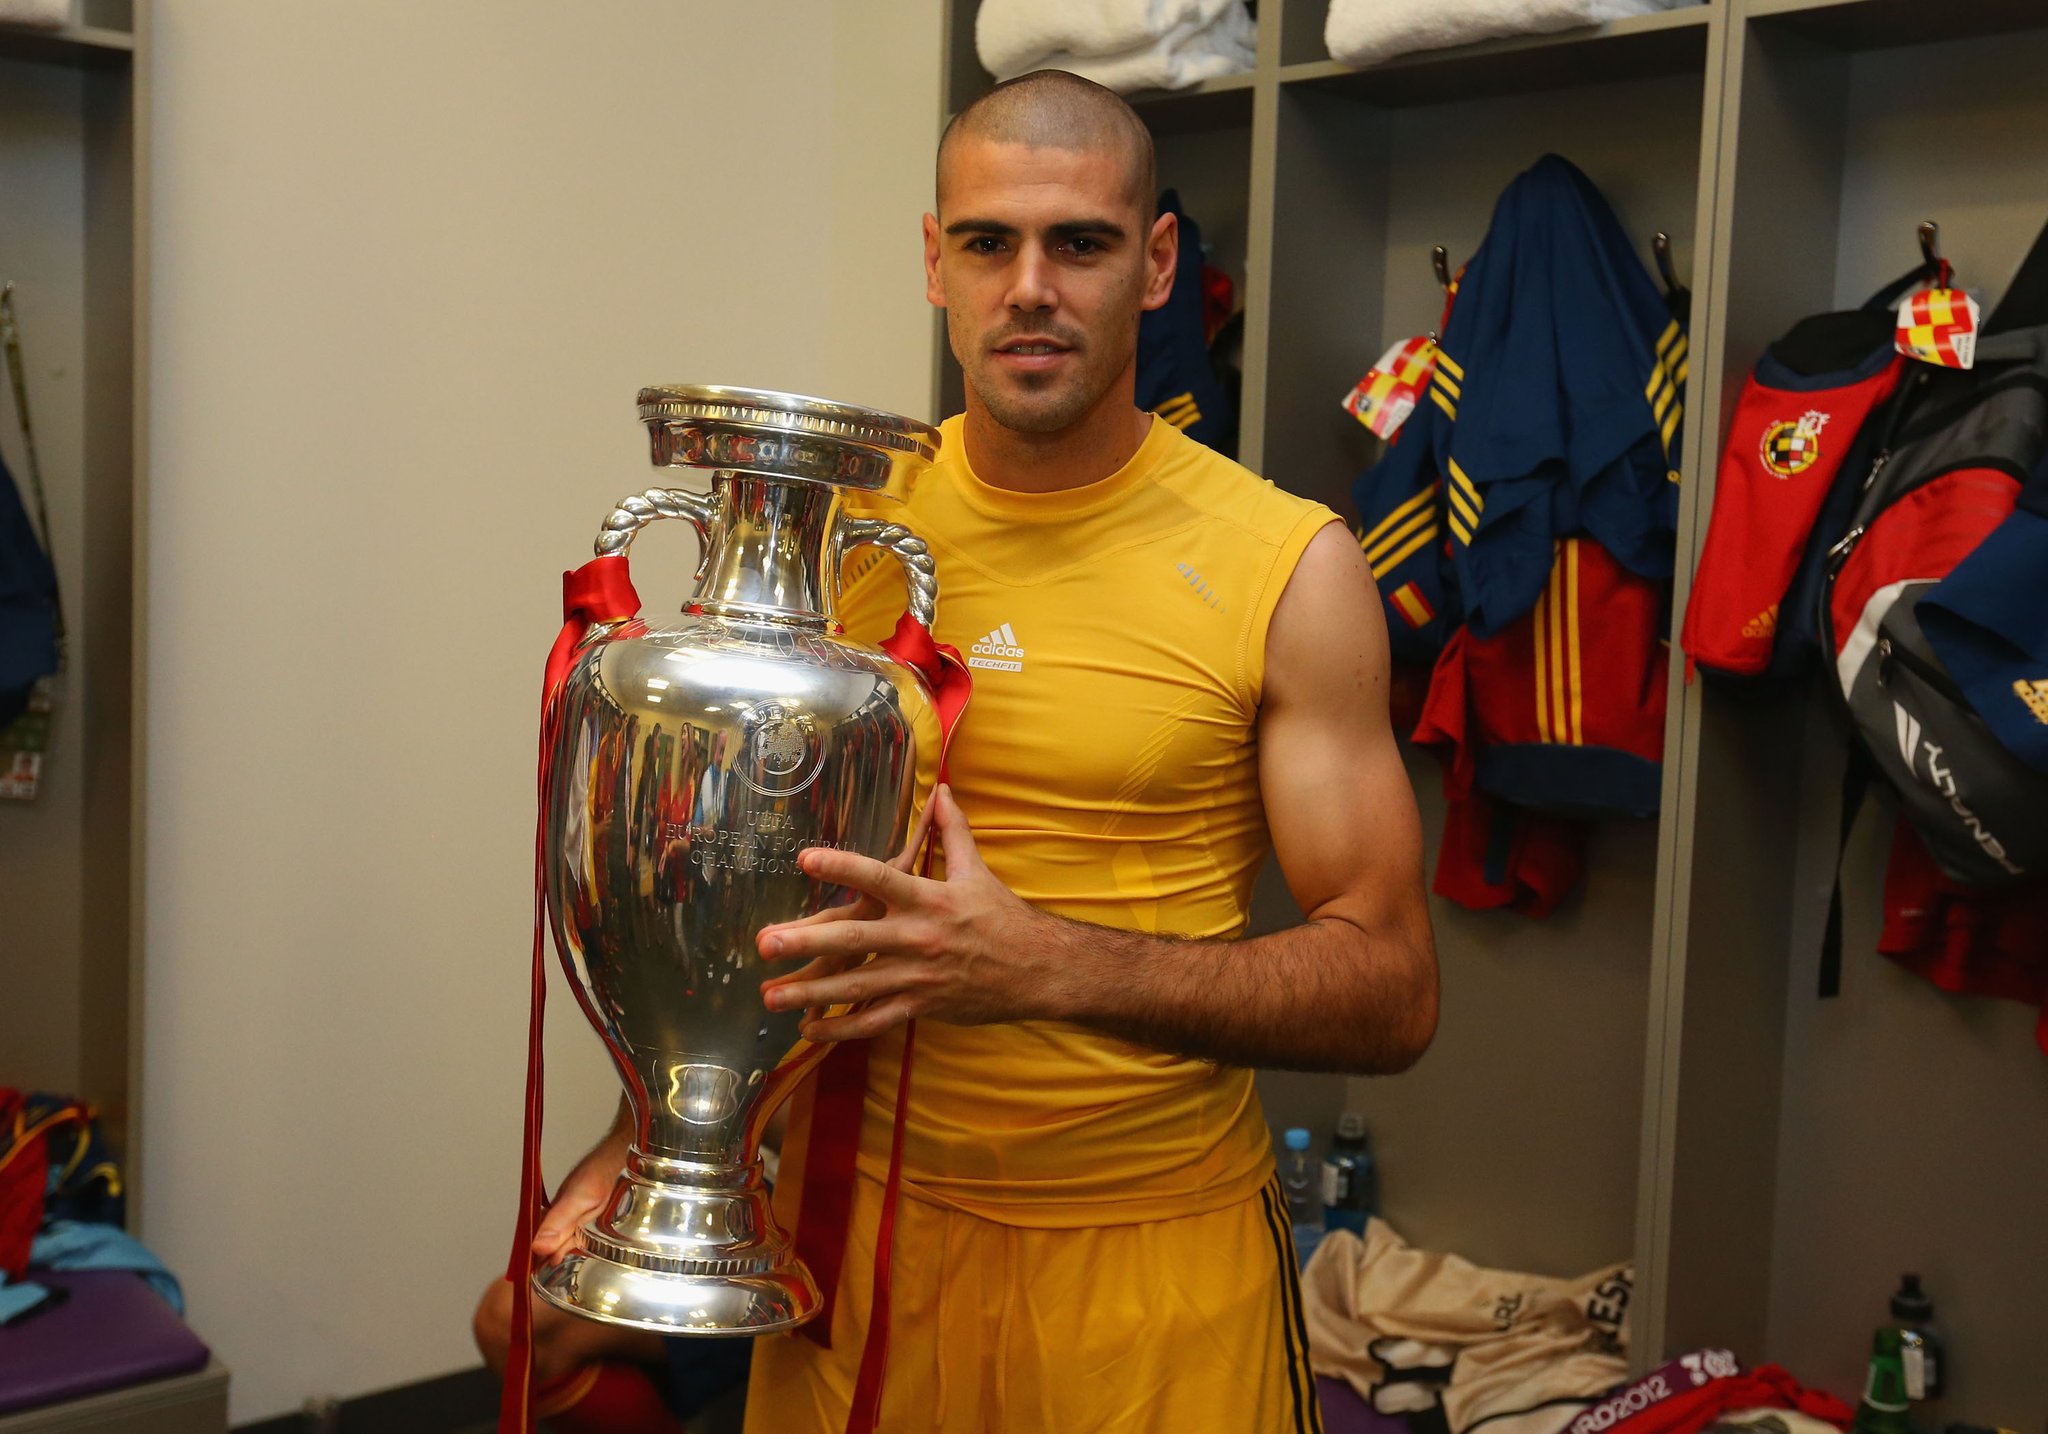  2010 world champion EURO 2012  Happy birthday, Víctor Valdés  